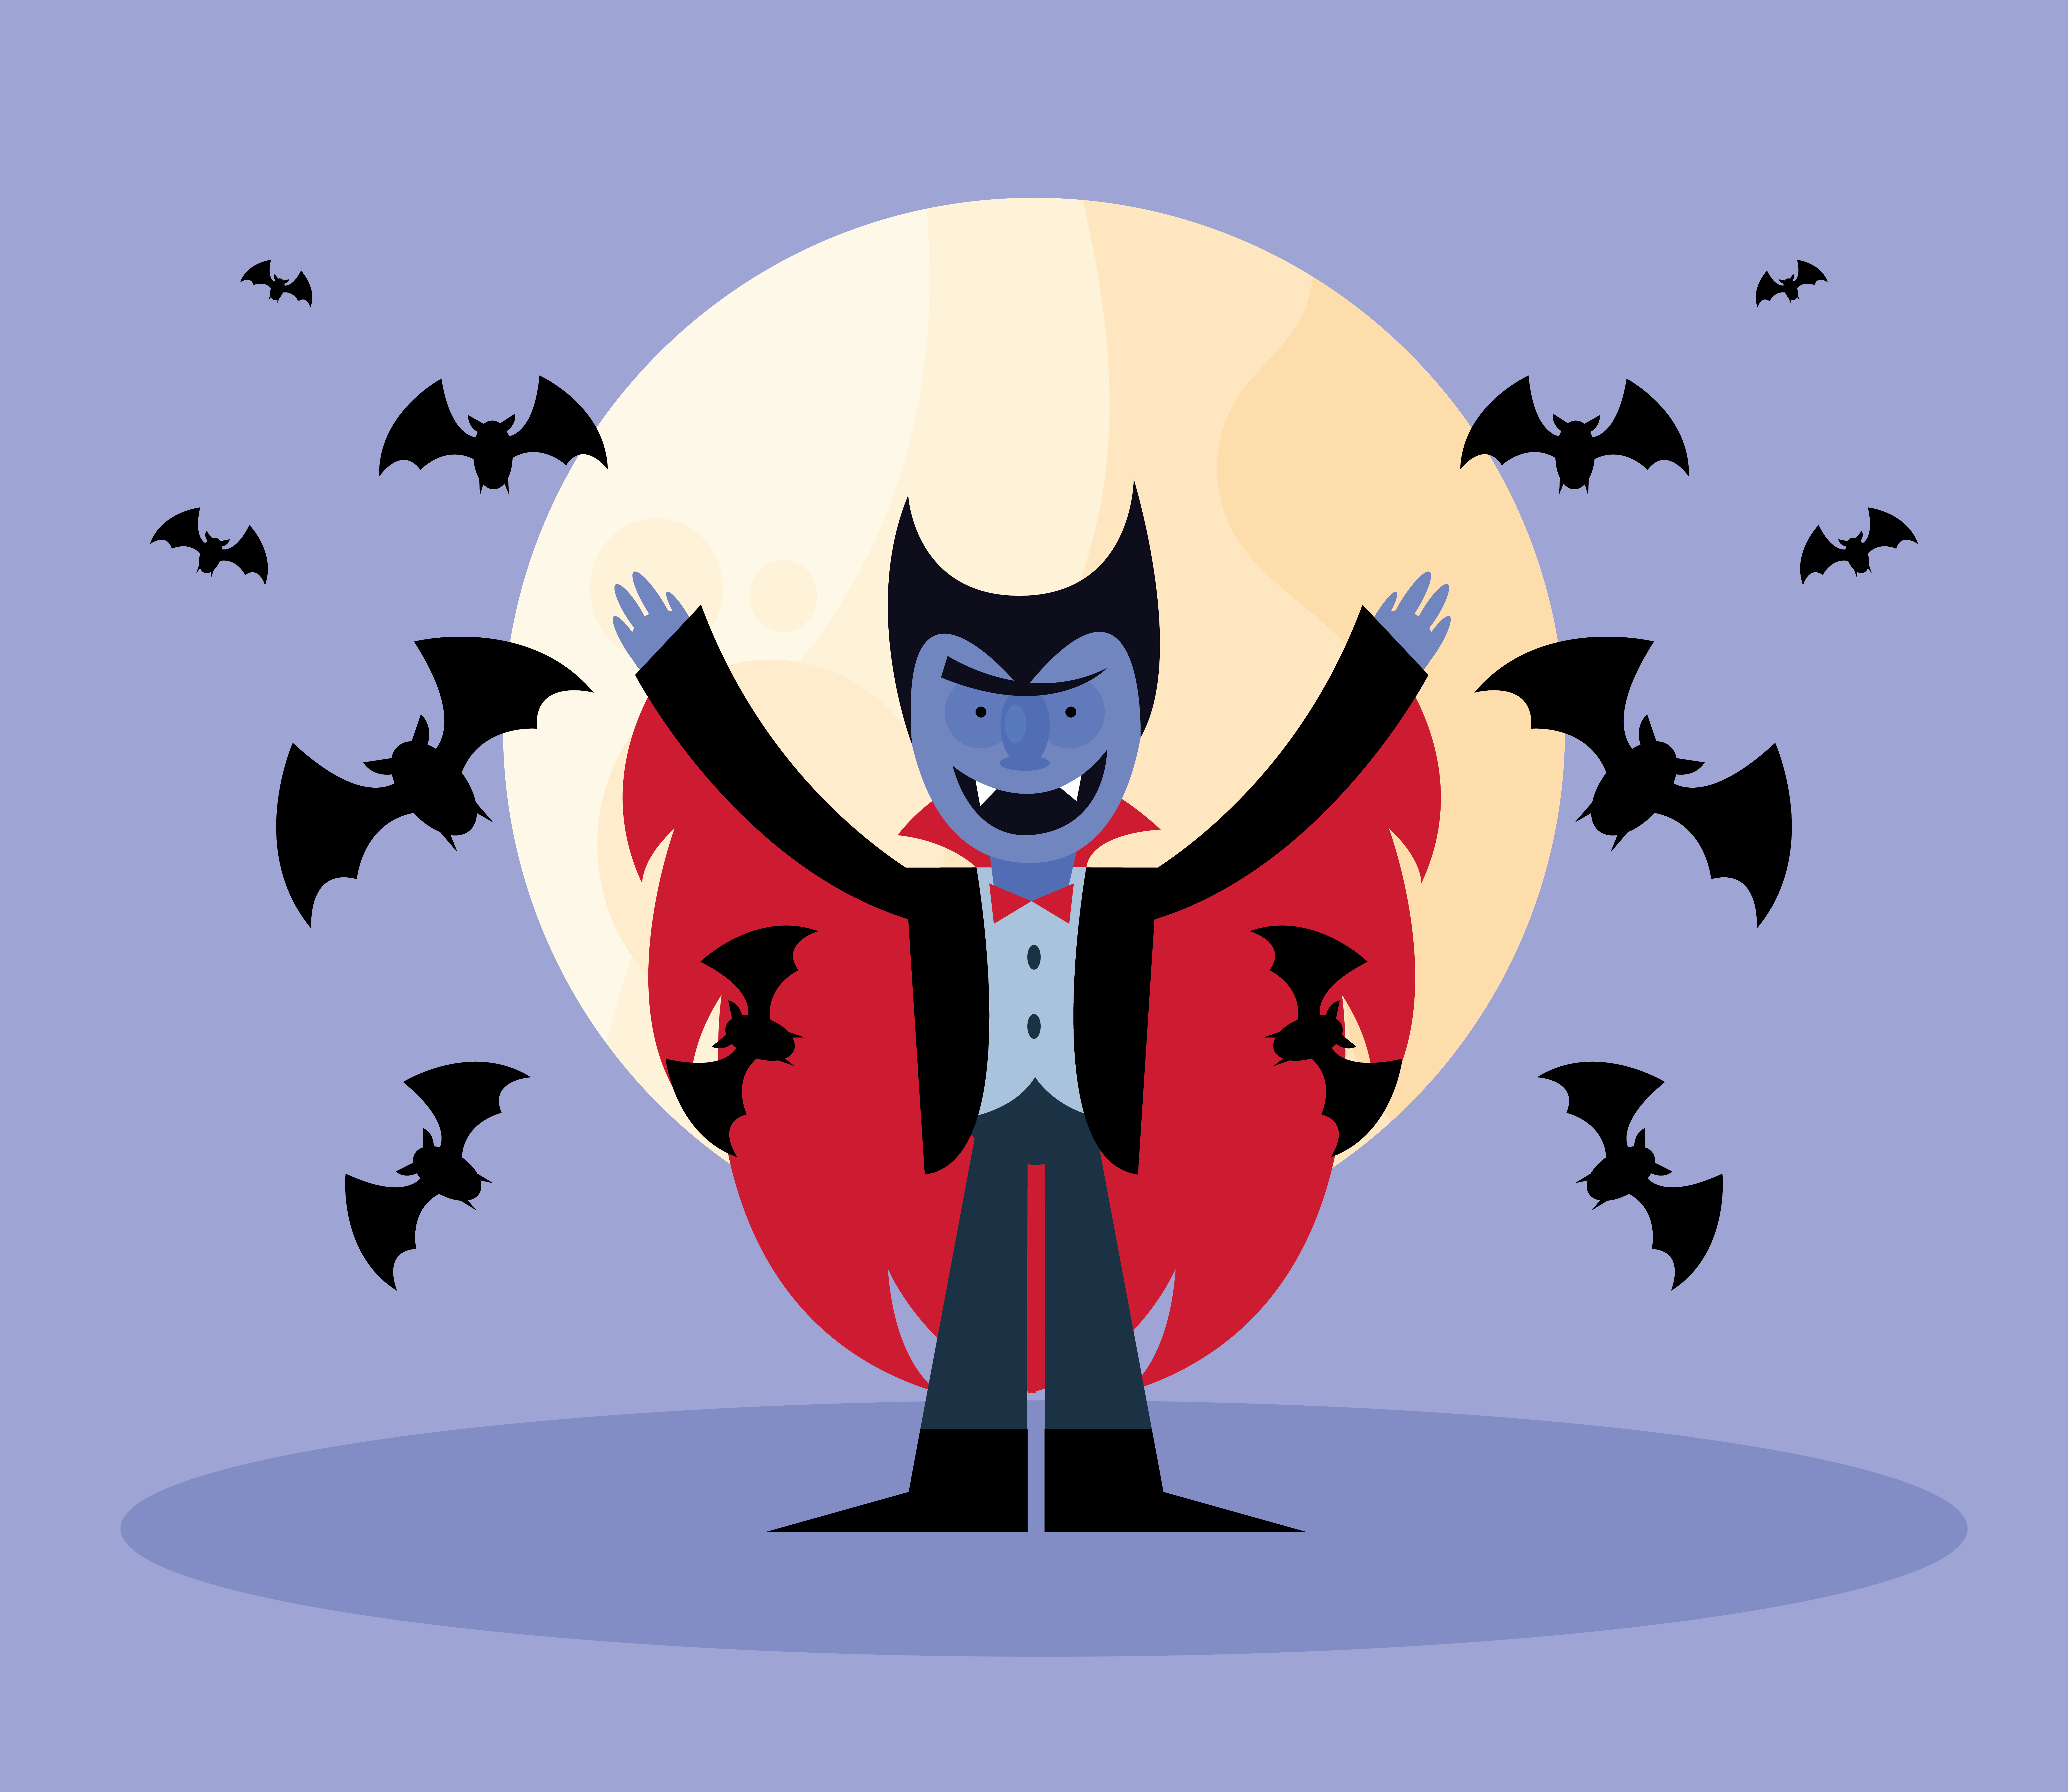 Vampire animation test  Animation, Halloween cartoons, Motion design  animation